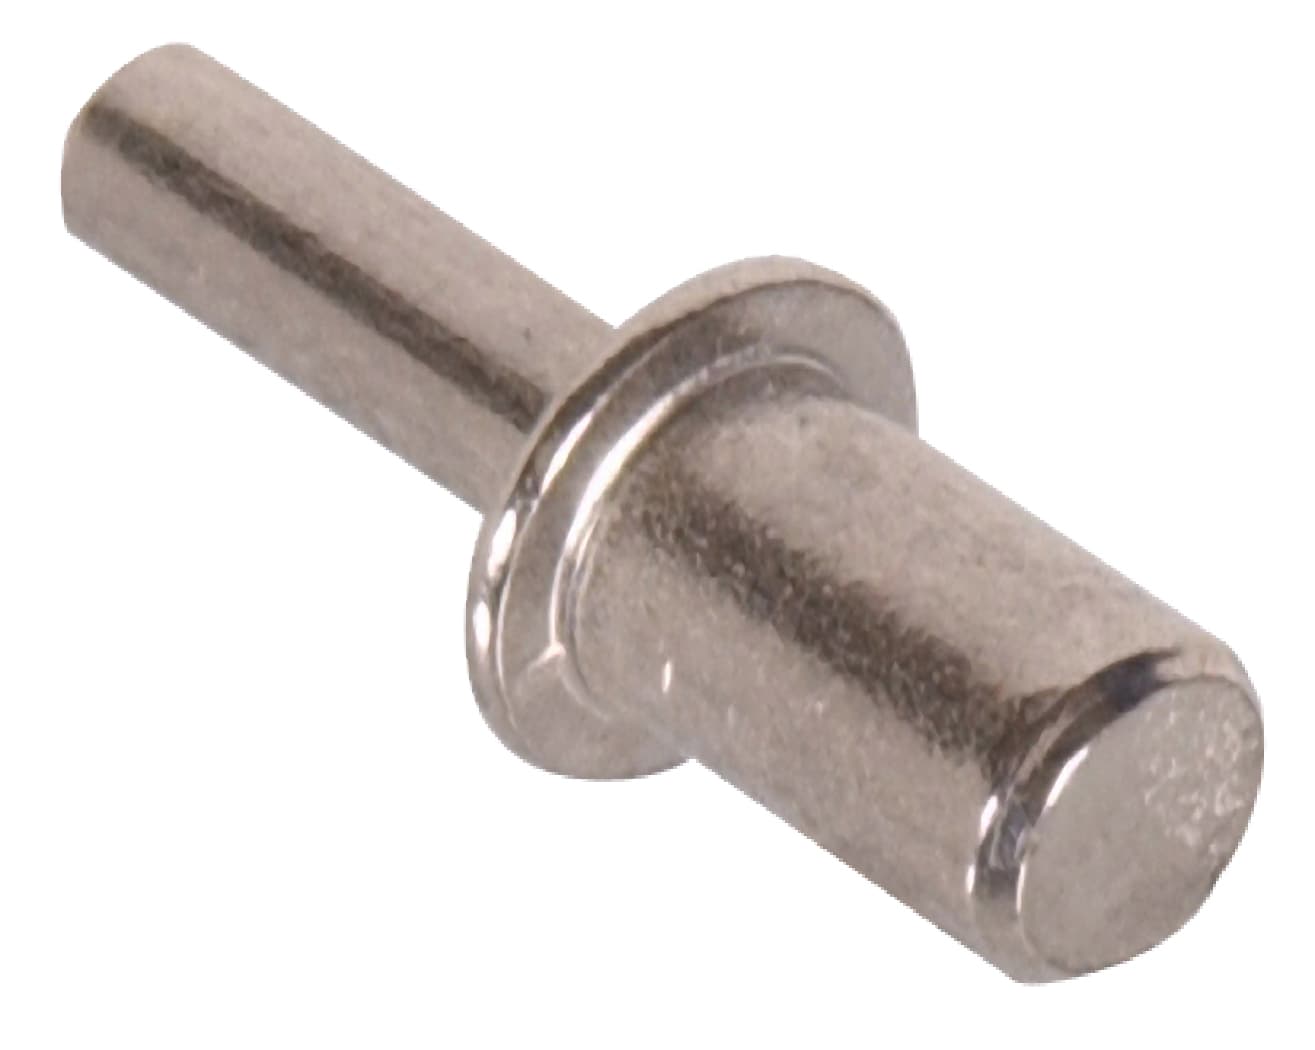 Metric Nickel Shelf Pins, 5mm, 4 pieces